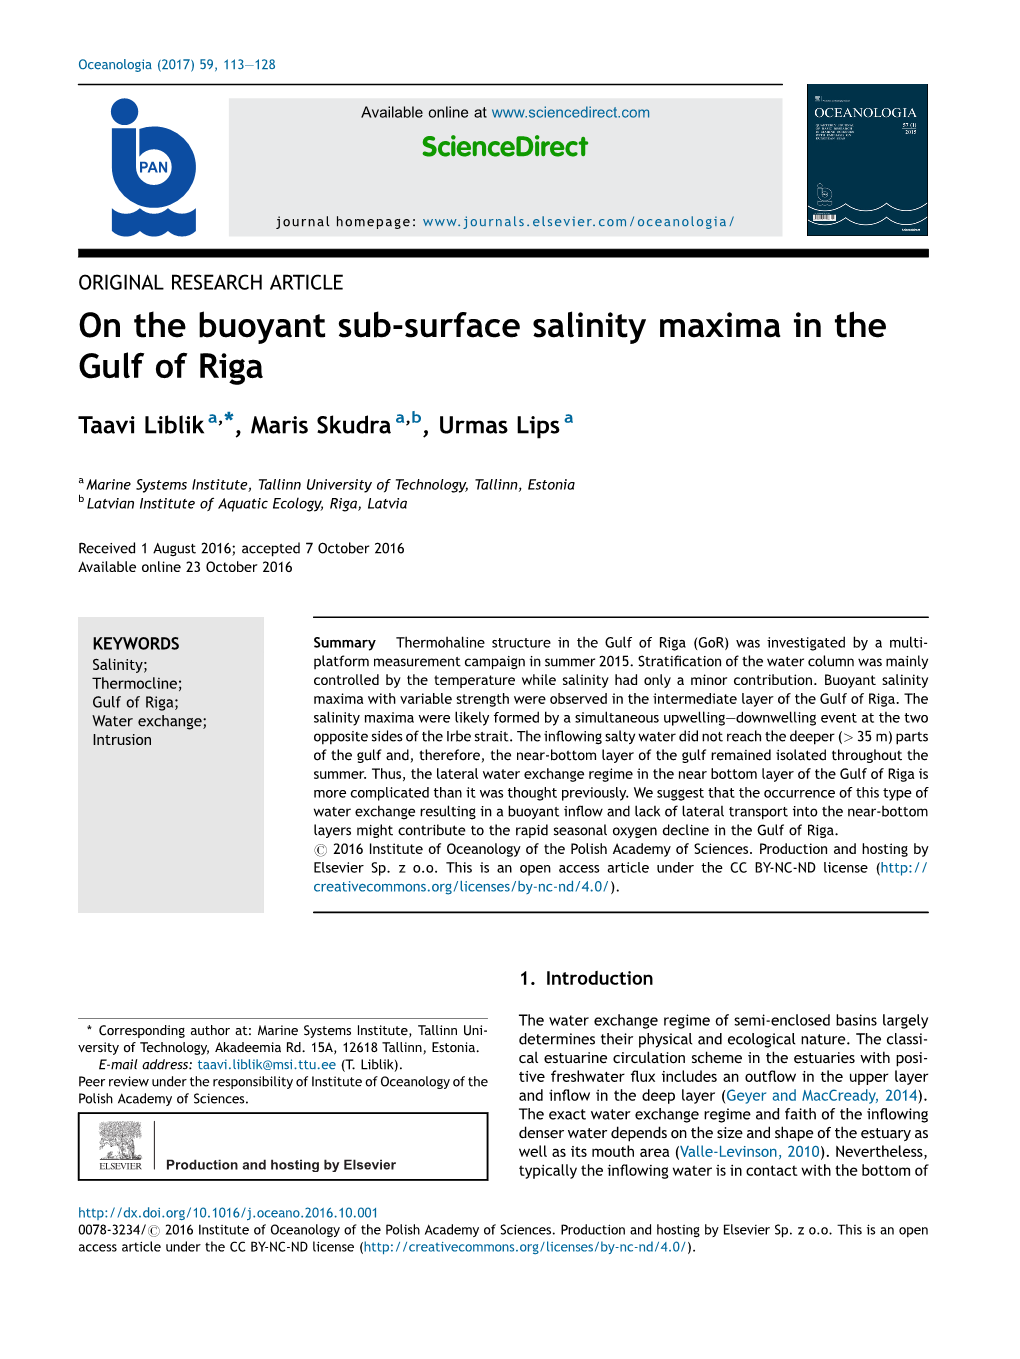 On the Buoyant Sub-Surface Salinity Maxima in the Gulf of Riga